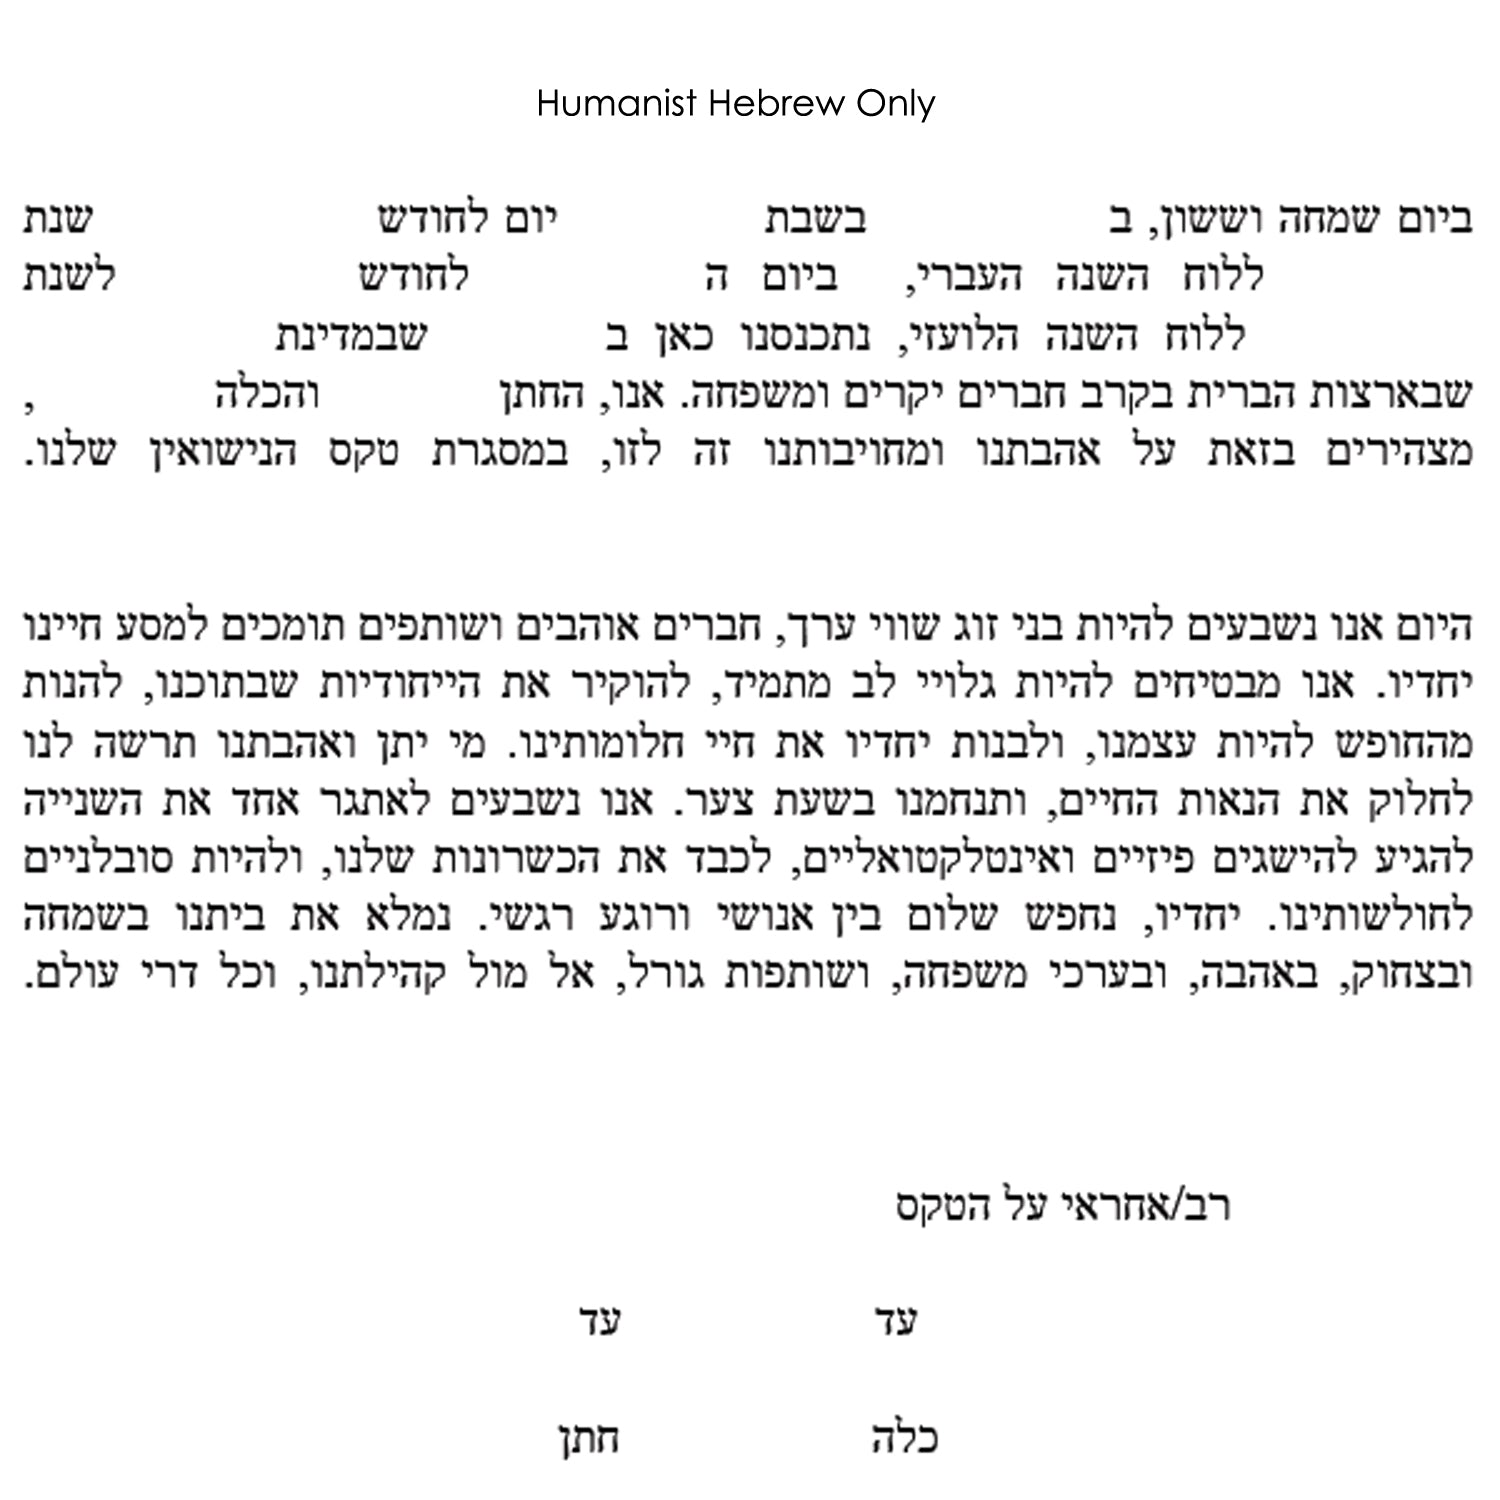 TINAK - Humanist Hebrew Only Text